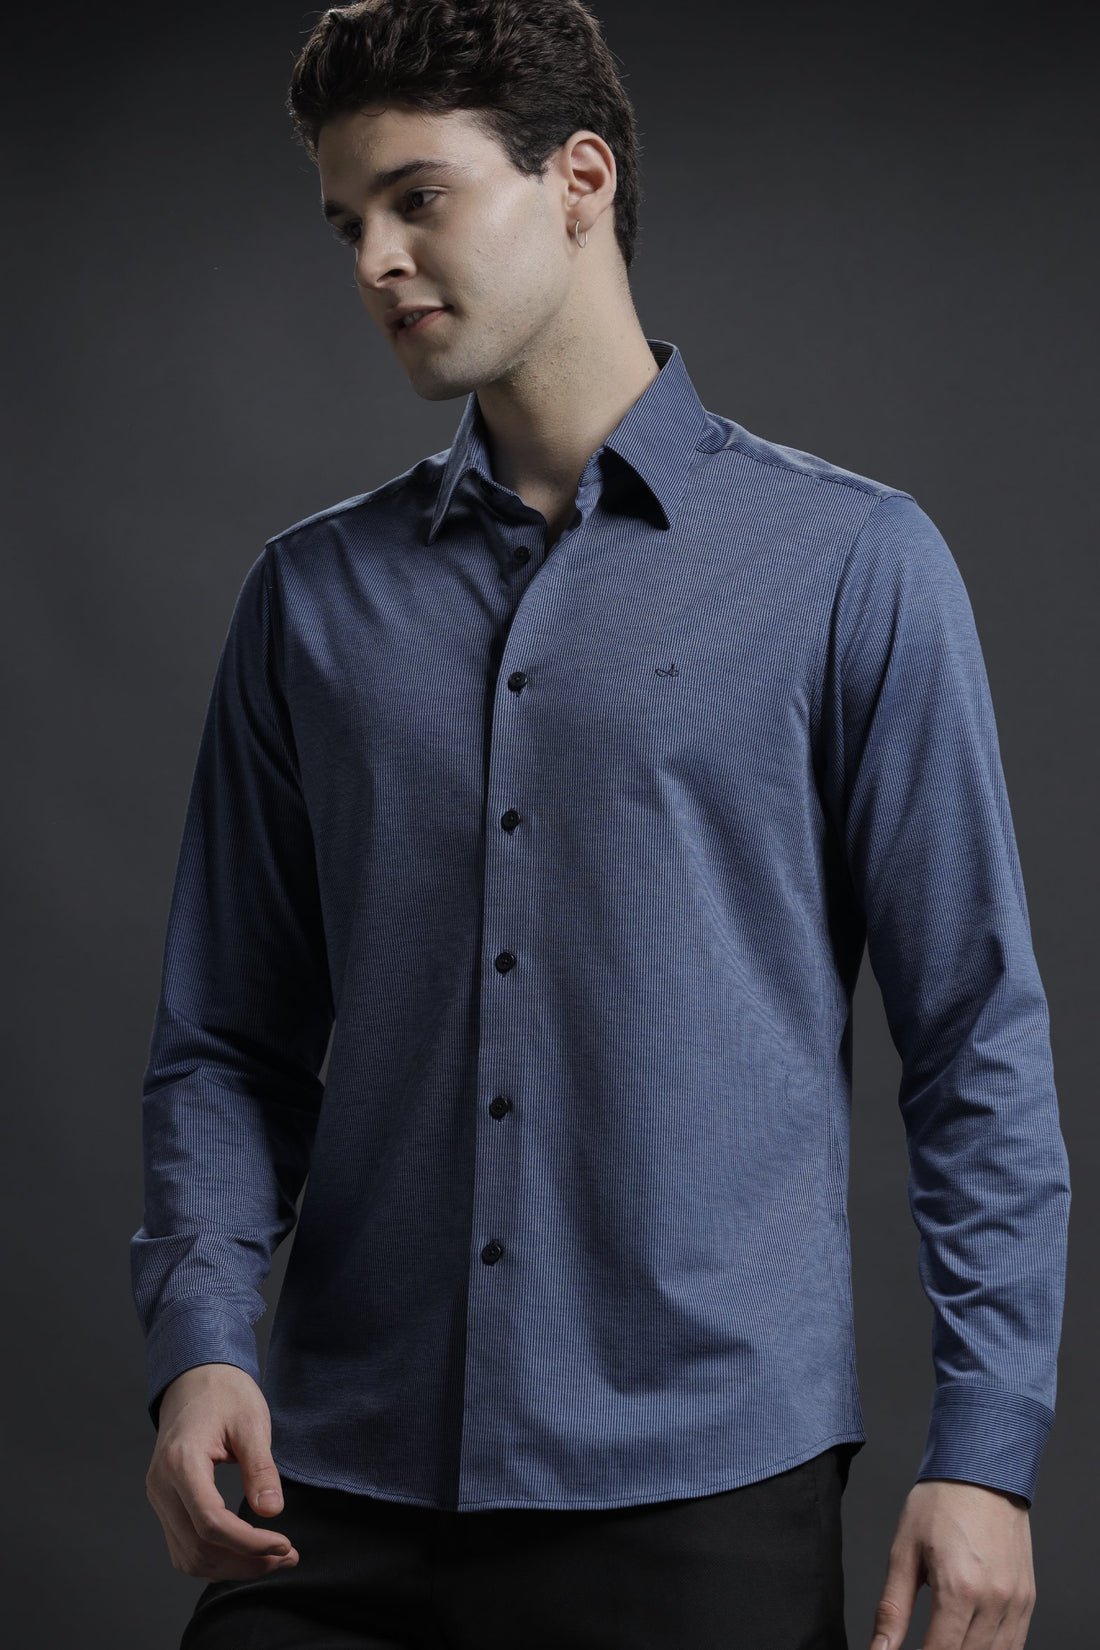 Vertical Fine Striped Navy Blue Cotton Stretch Shirt